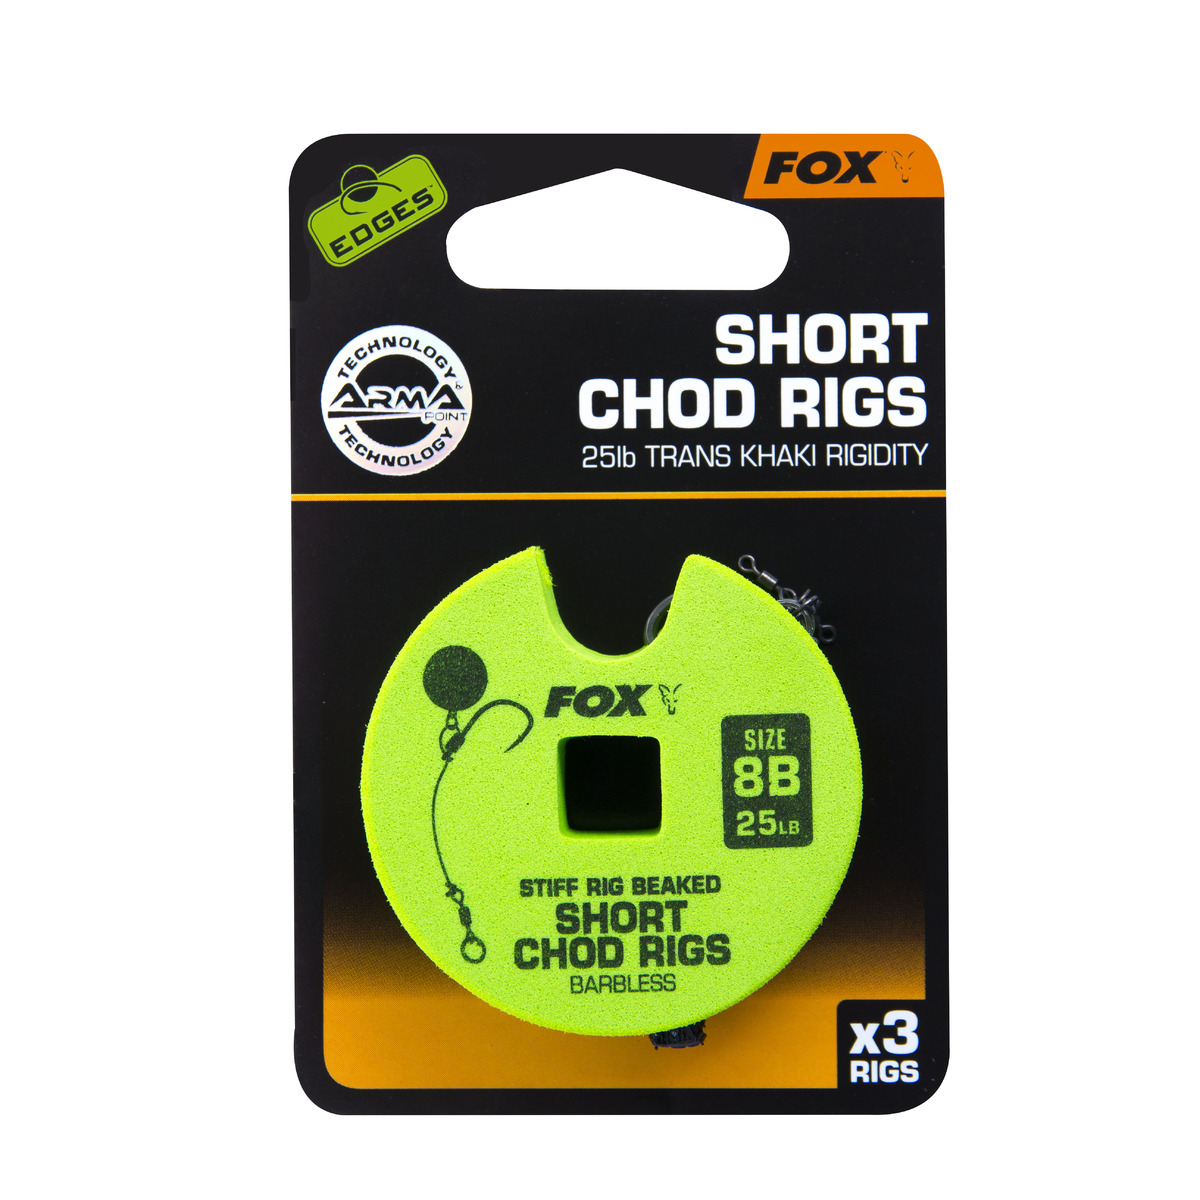 Fox Edges Chod Rigs - Short - 25lb, size 8 Short Chod Rig Barbless